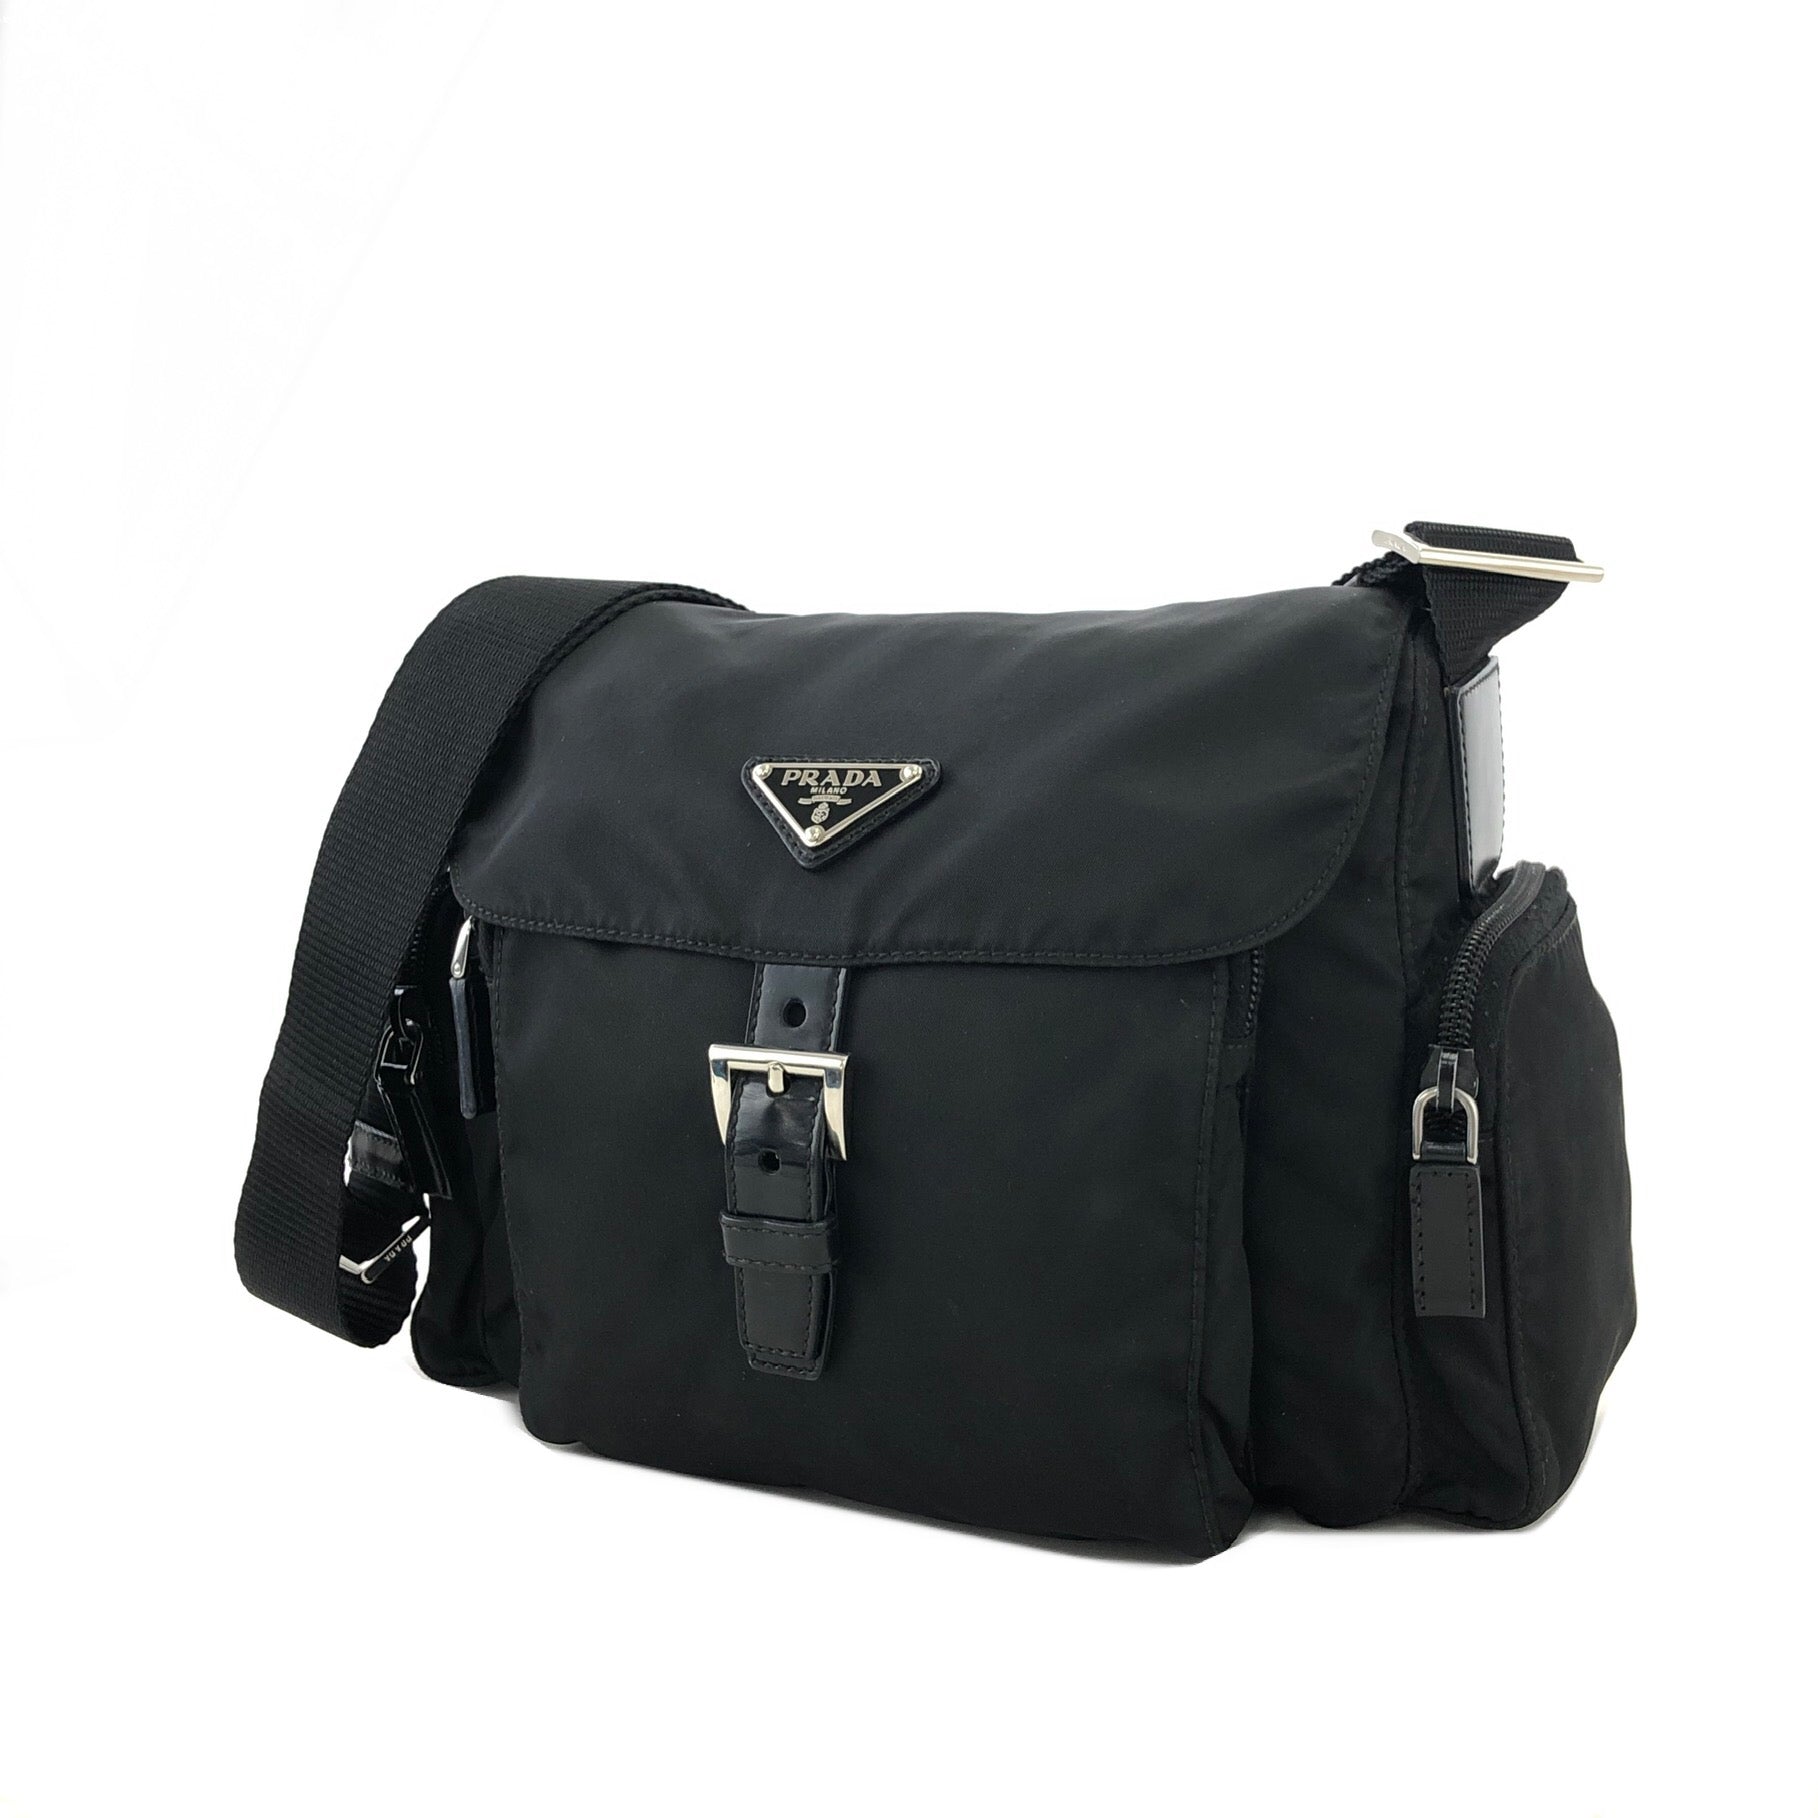 Black Re-Nylon Triangle cross-body bag, Prada